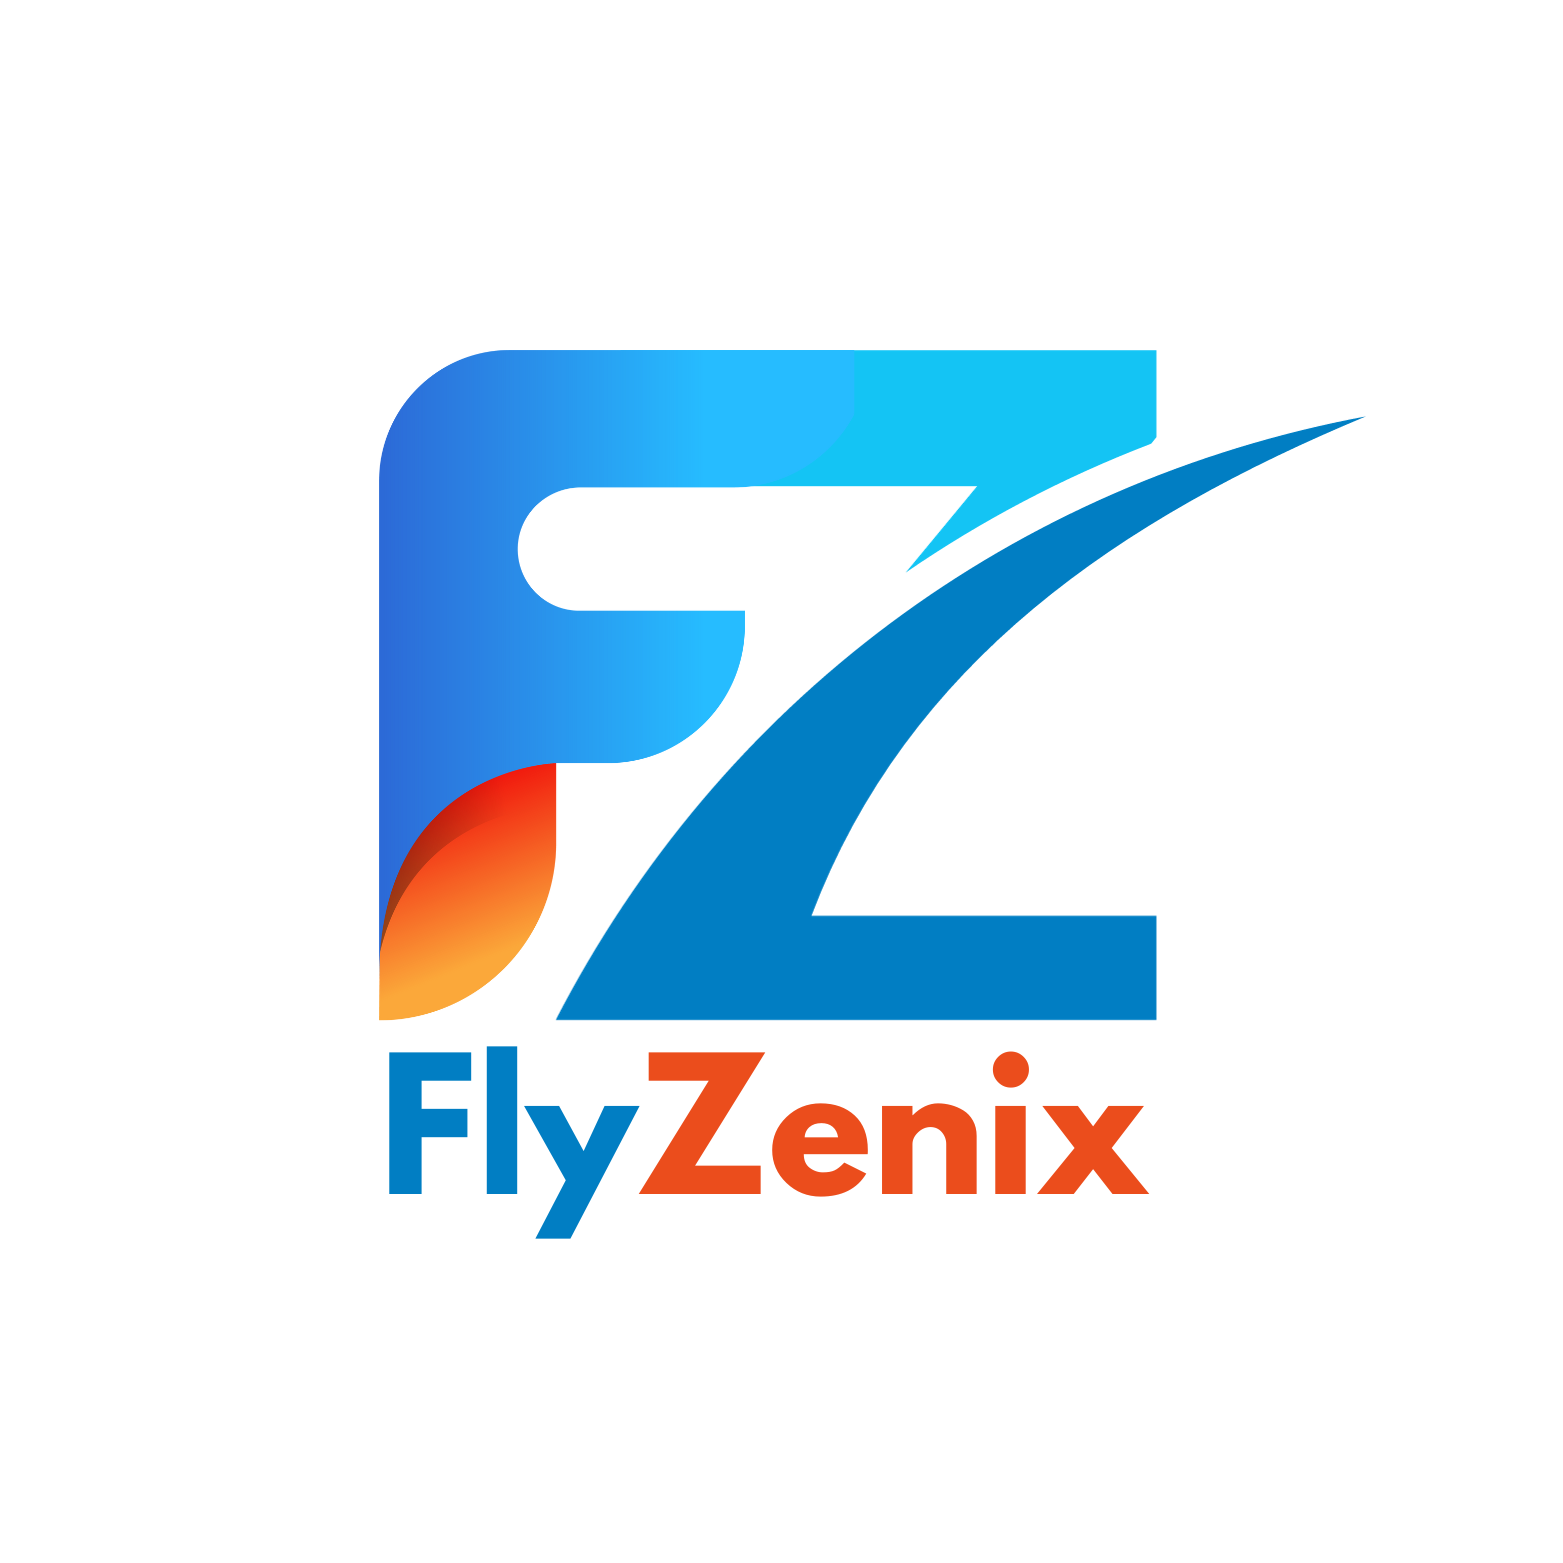 FlyZenix png logo